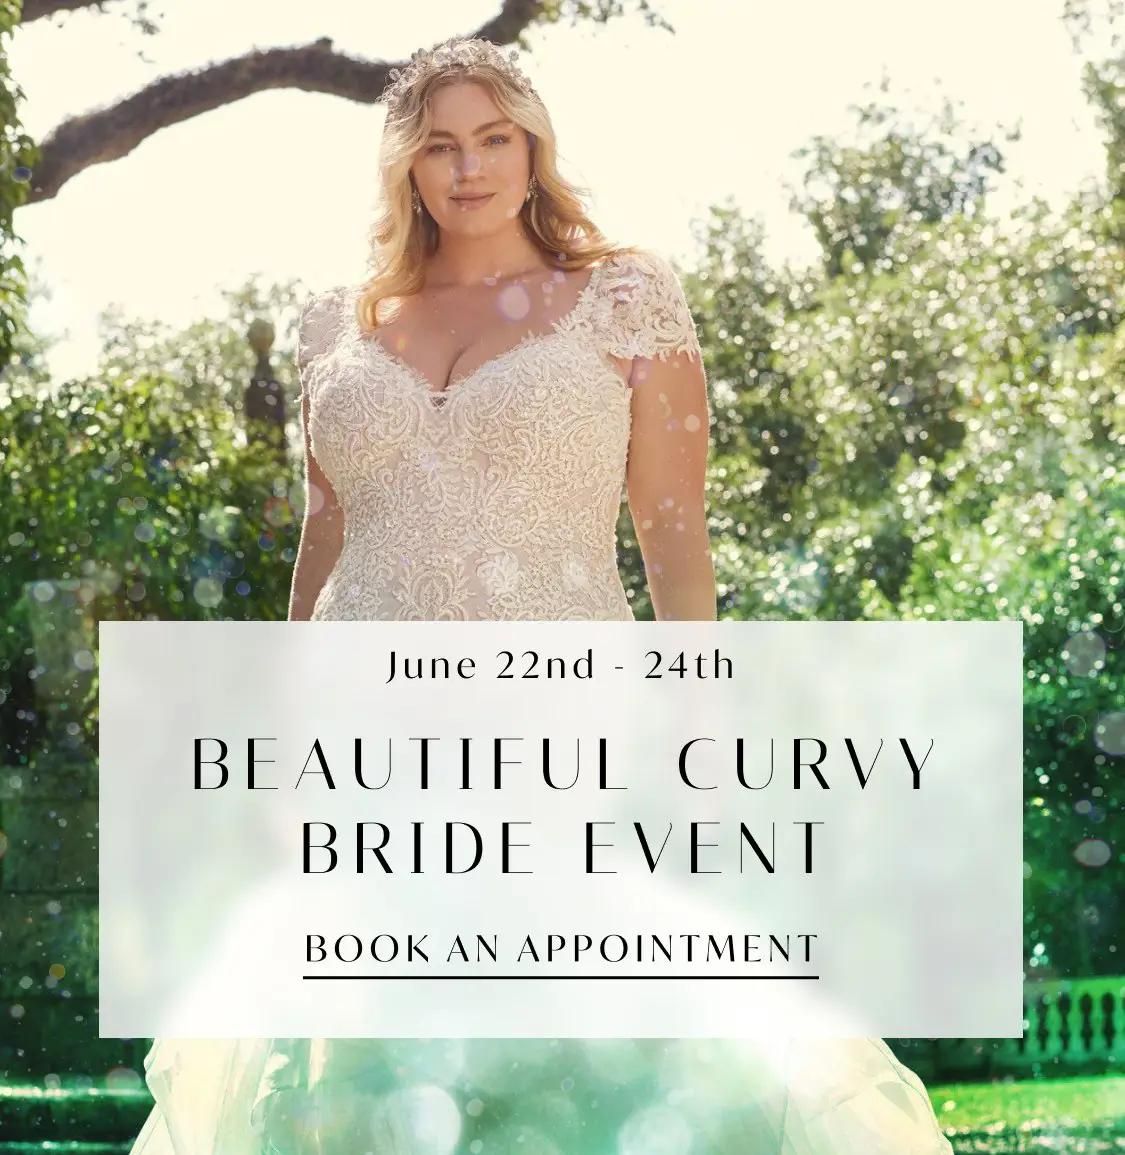 Beautiful Curvy Bride event on June 22